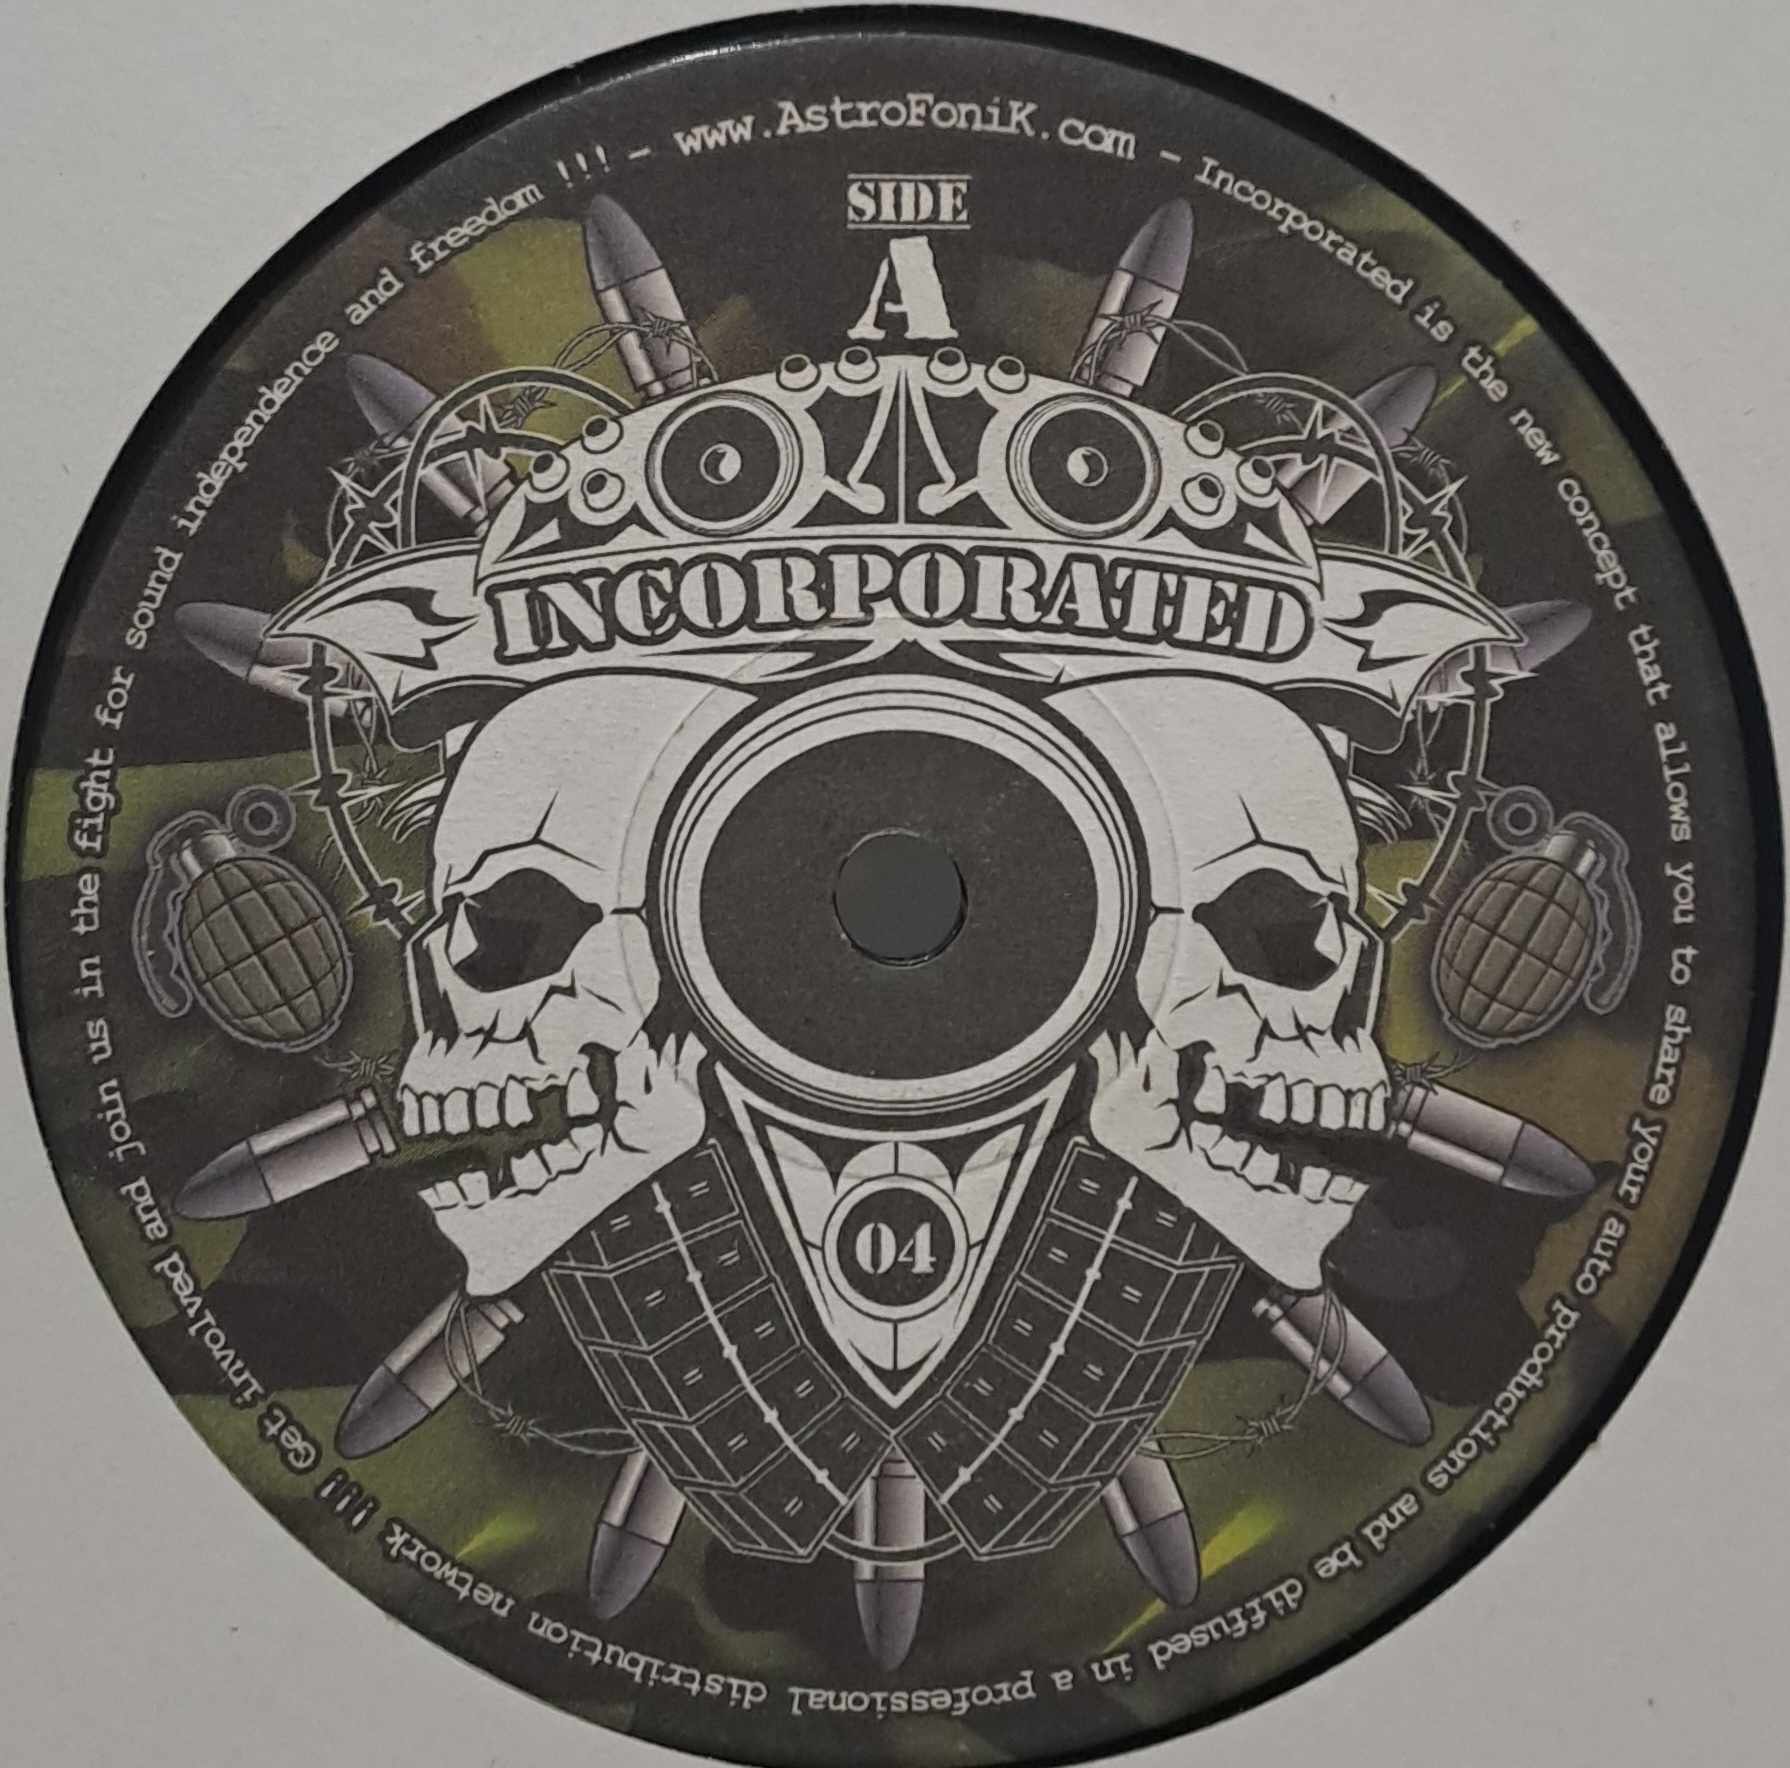 Incorporated 04 - vinyle tribecore